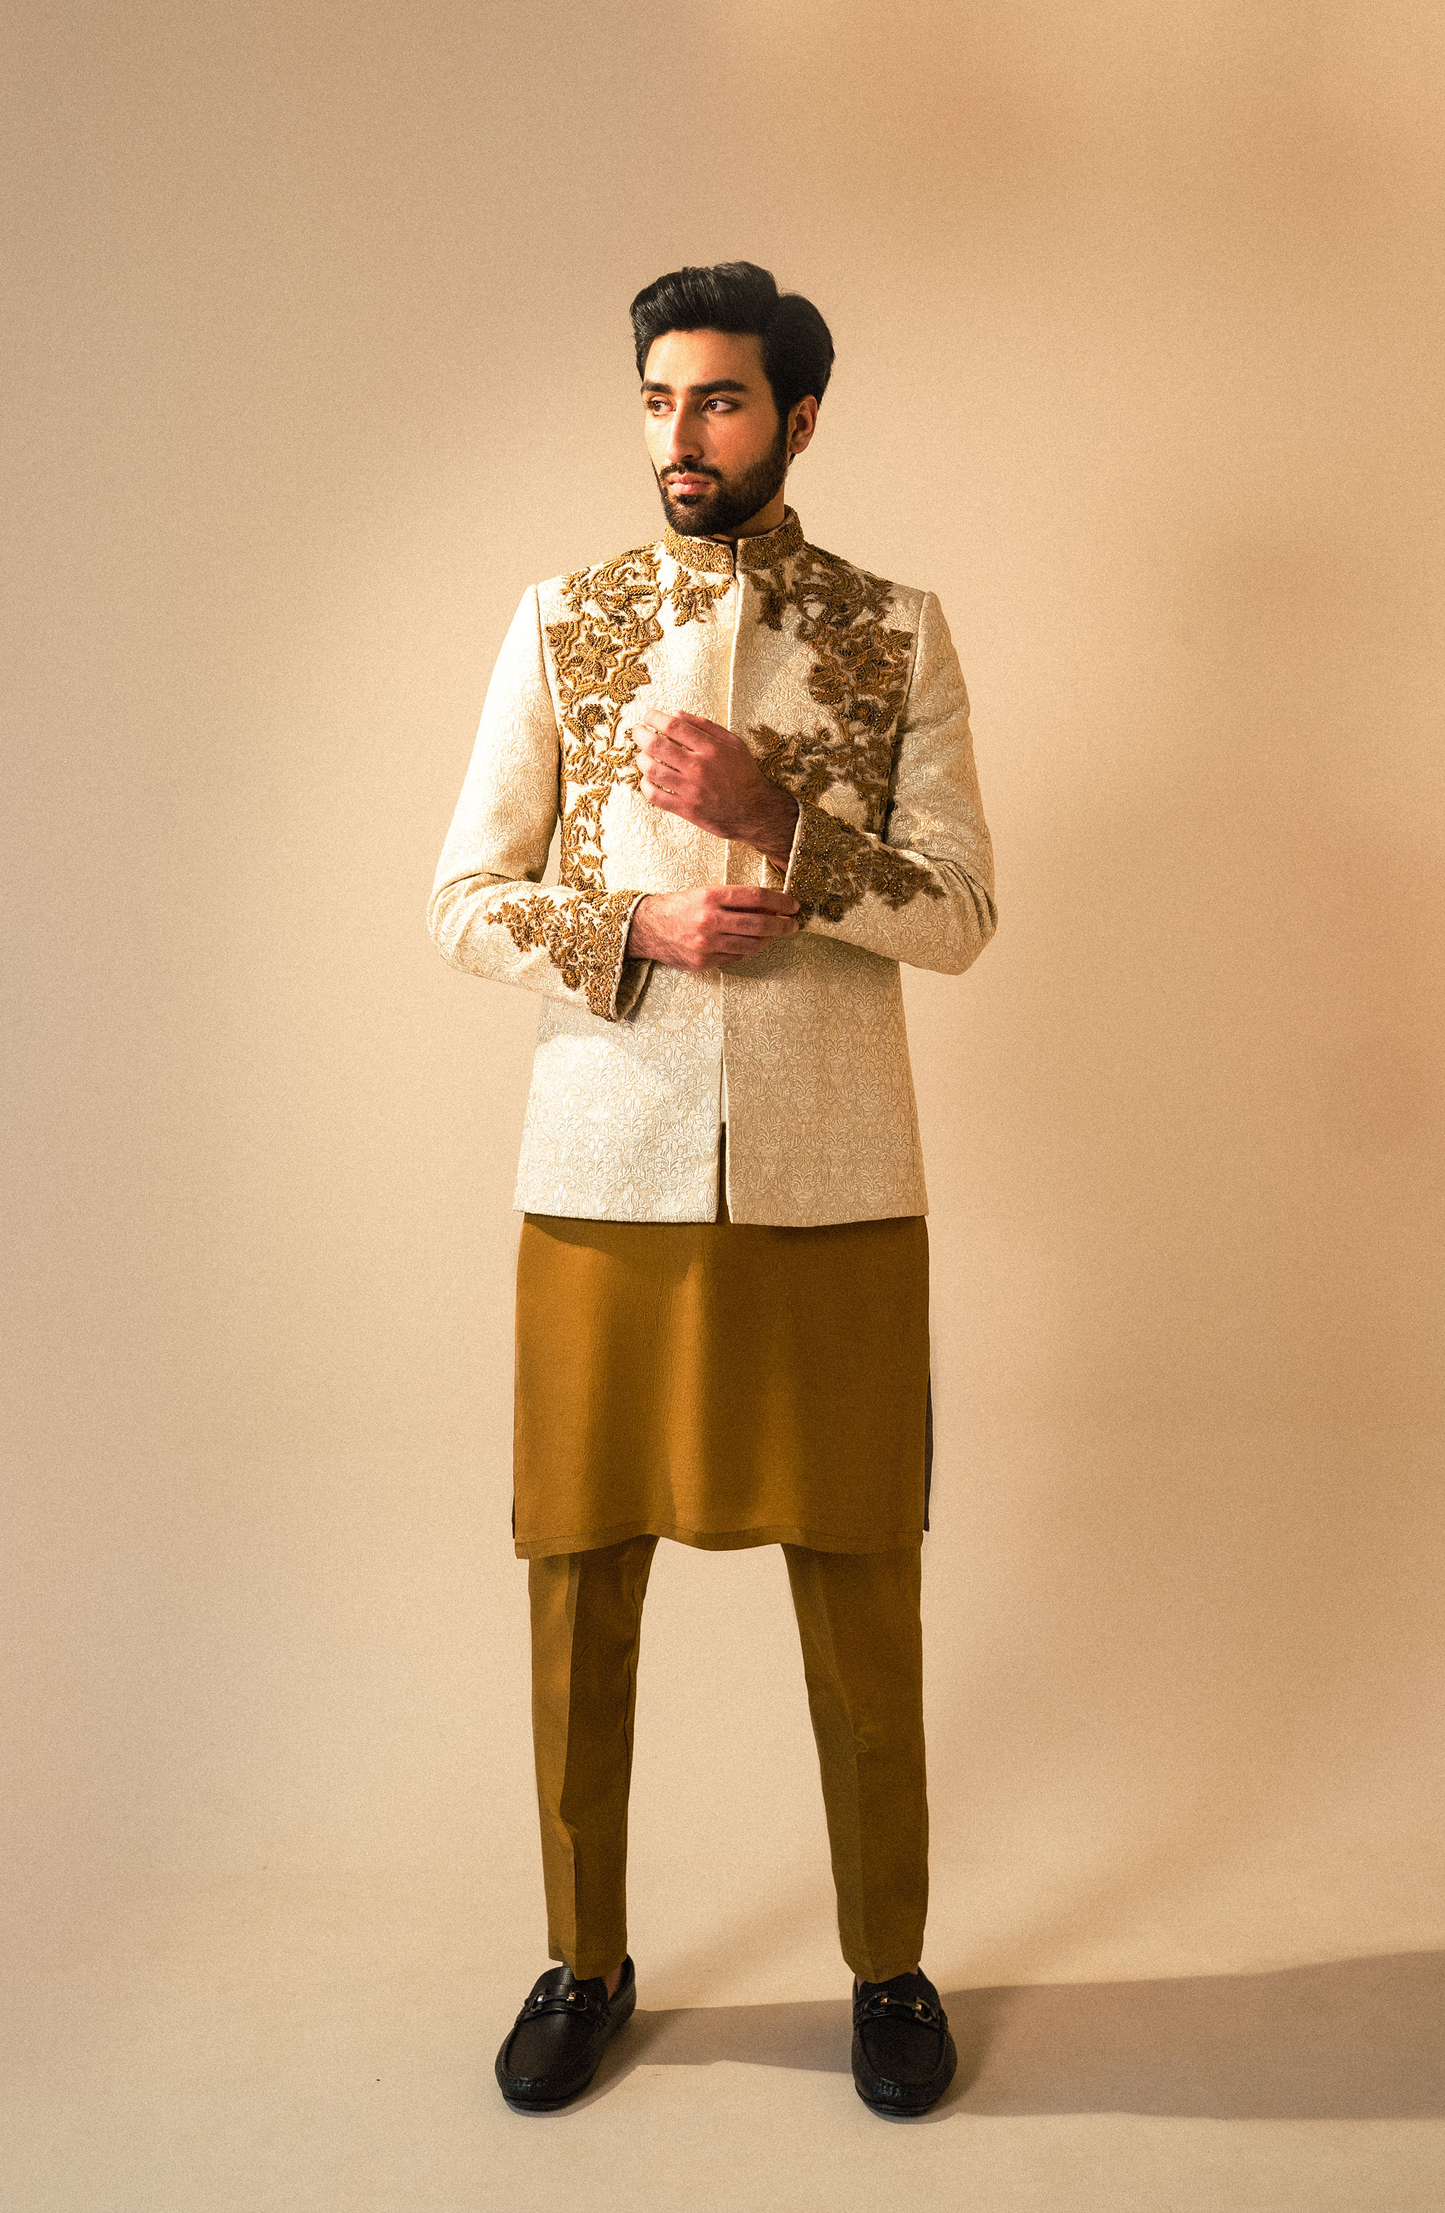 Prince coat from Pakistani designer